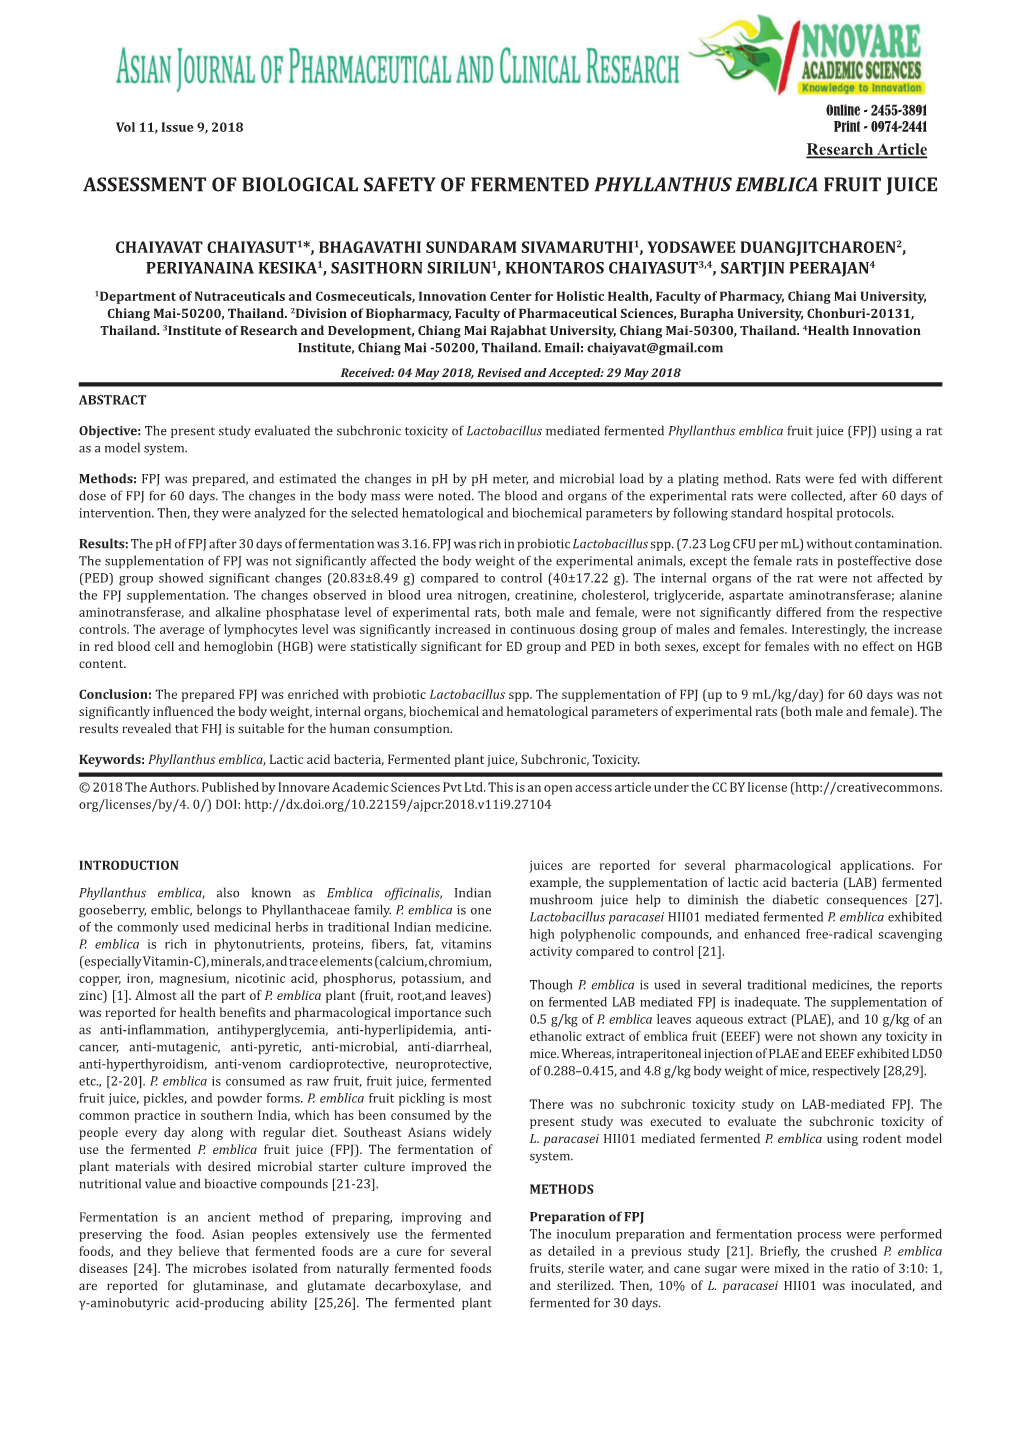 Assessment of Biological Safety of Fermented Phyllanthus Emblica Fruit Juice